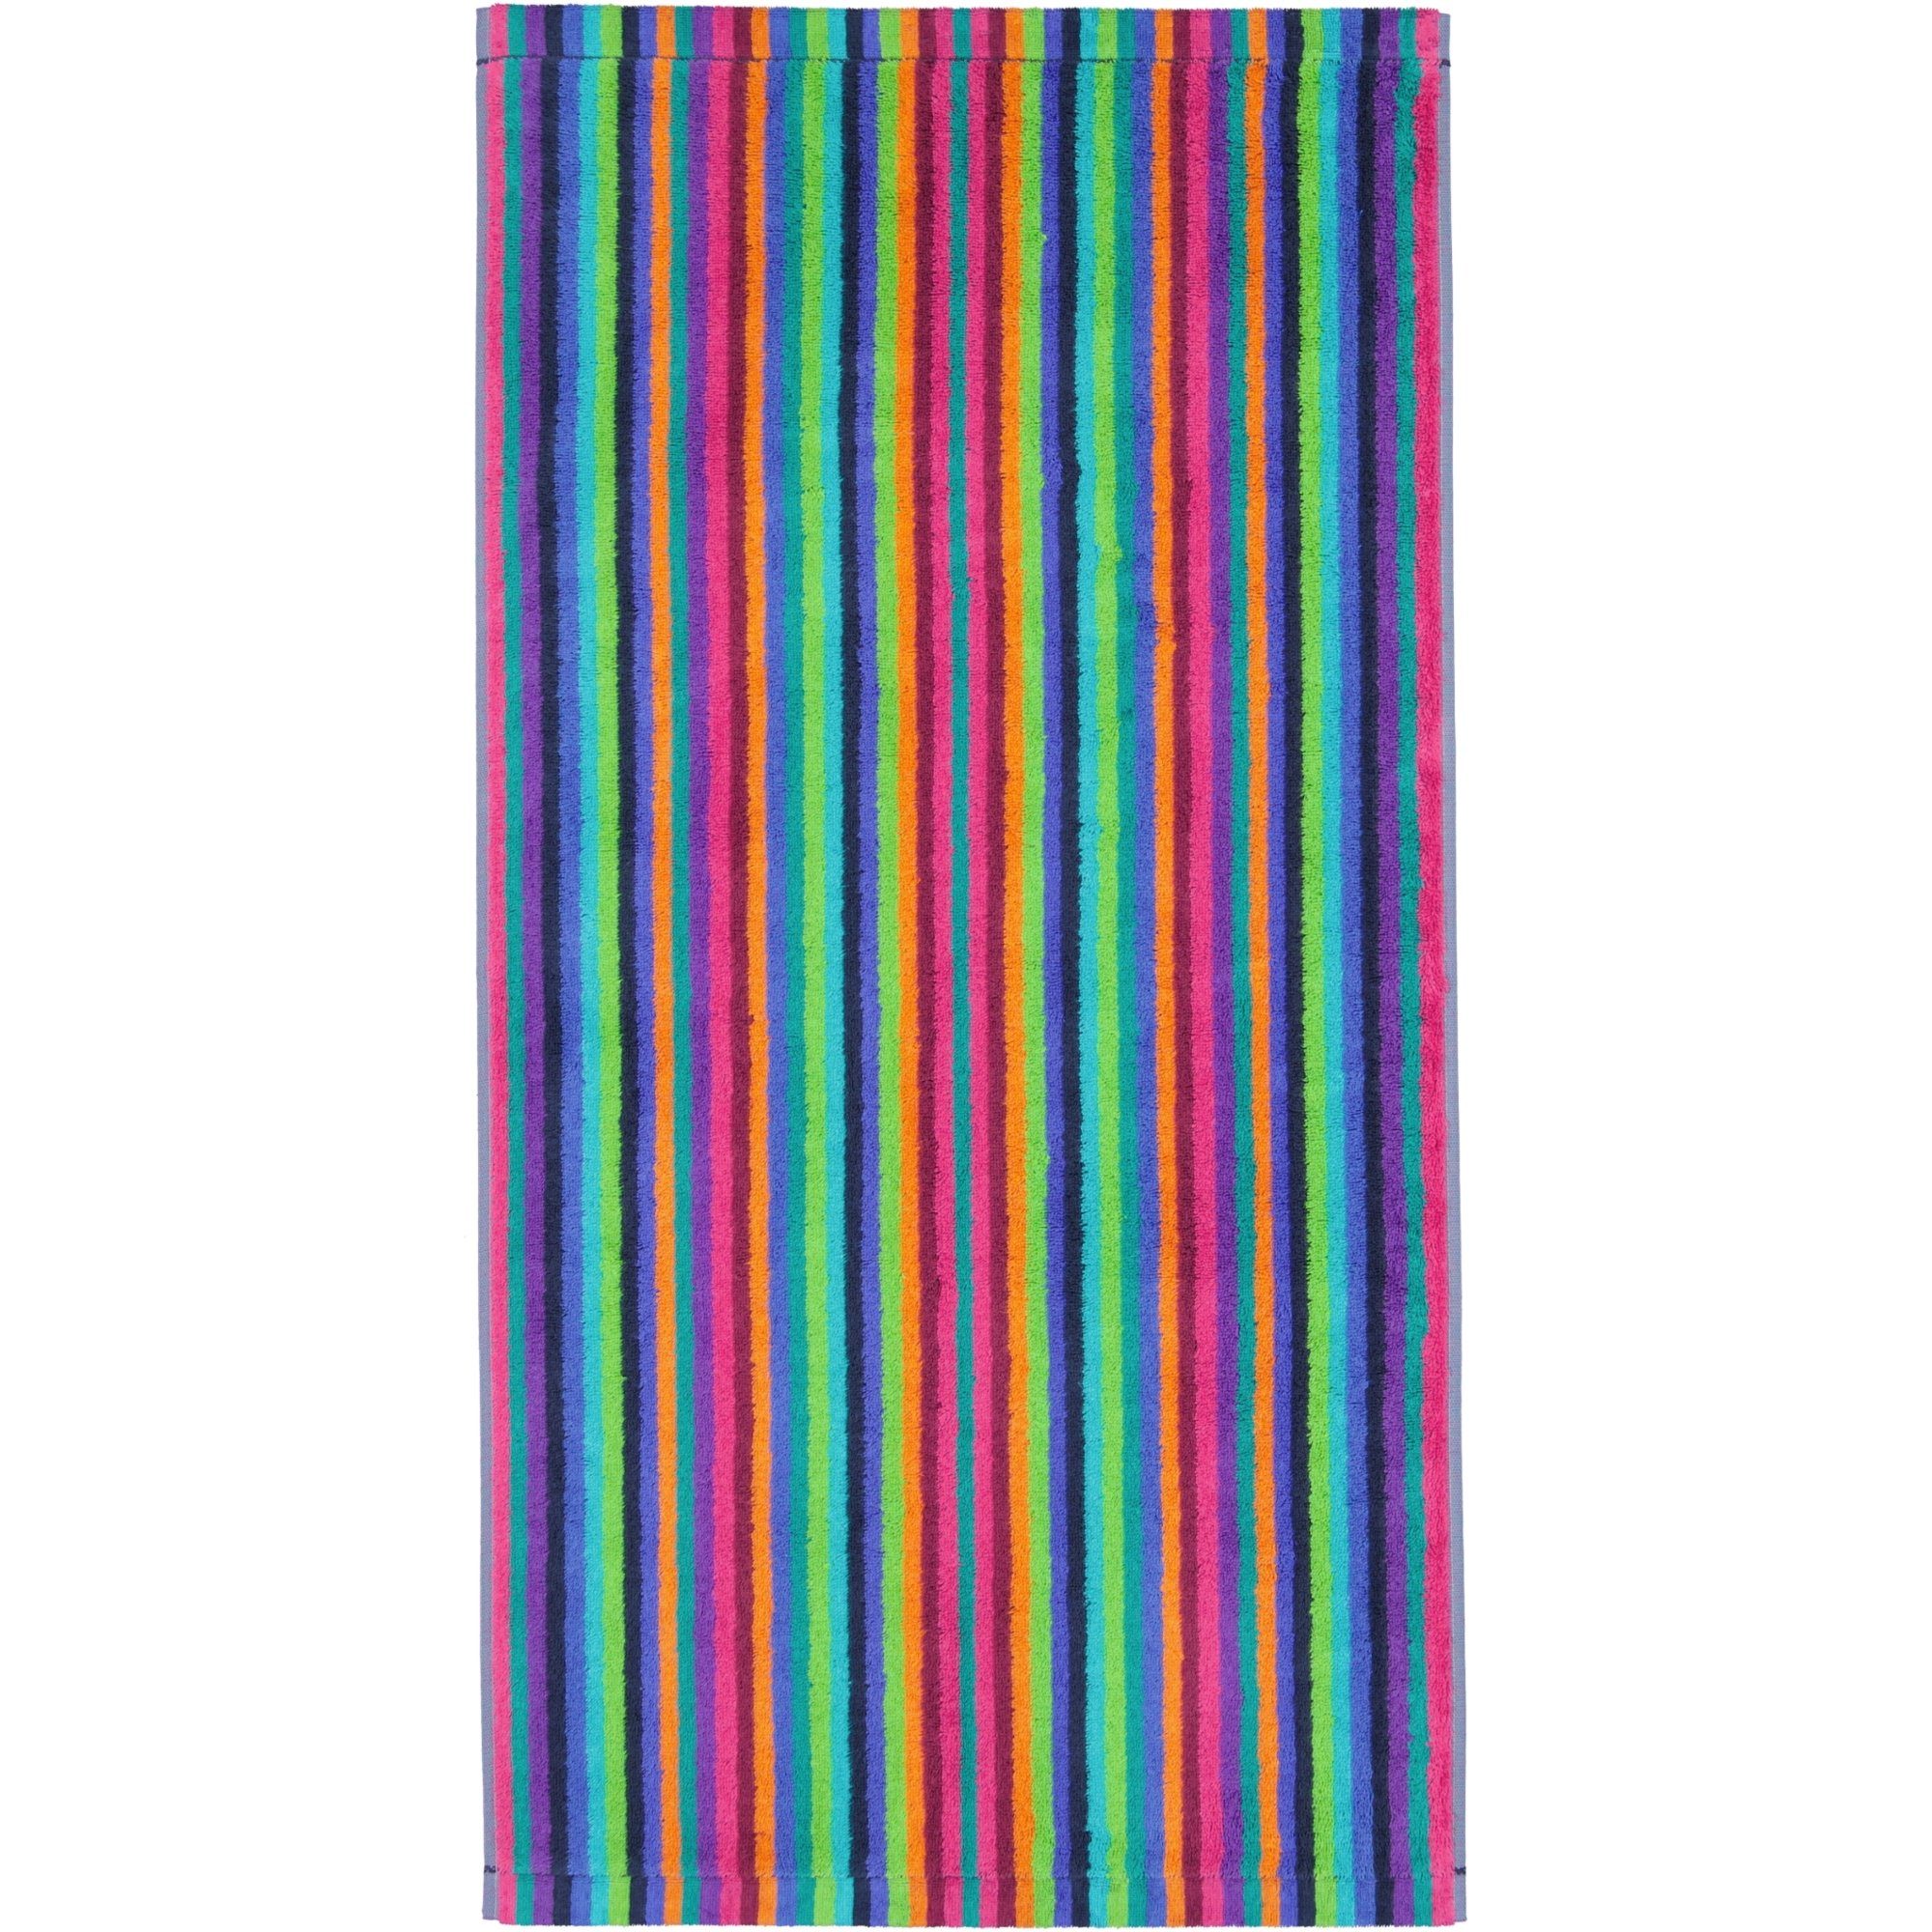 Cawö Handtücher Life Style Streifen 7048, 100% Baumwolle multicolor - 84